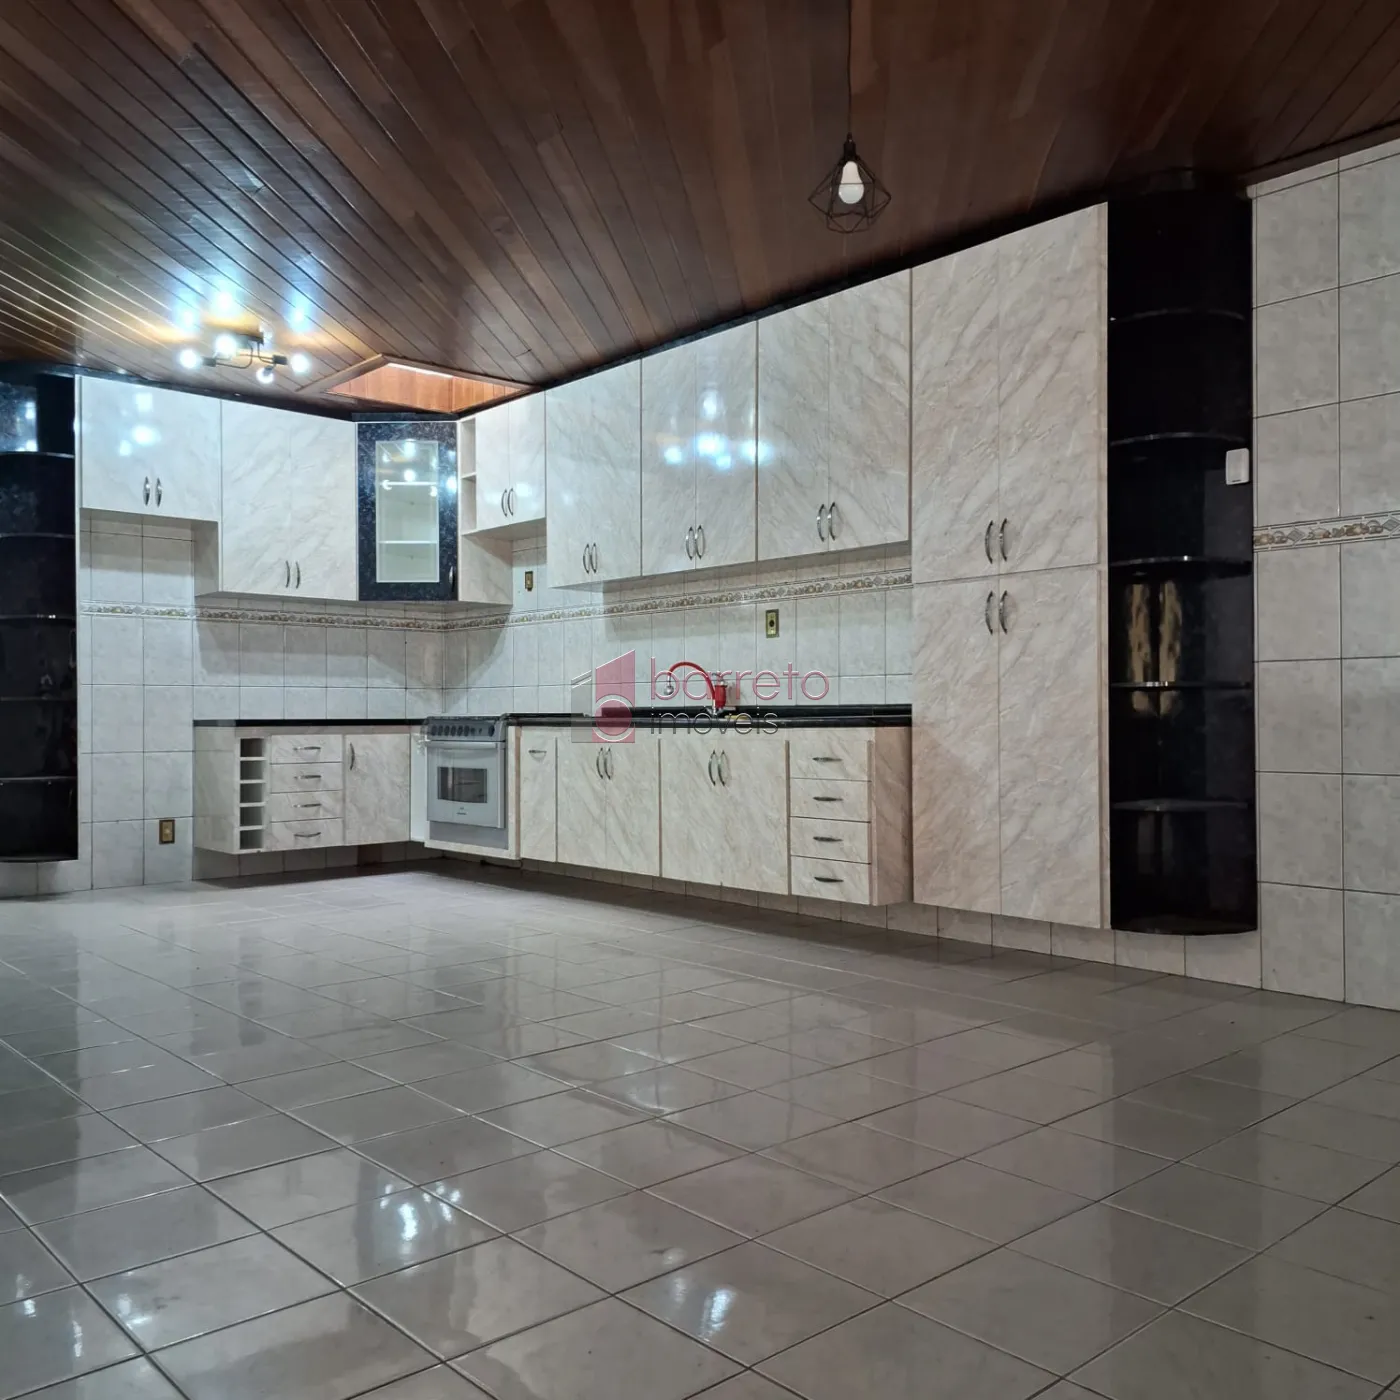 Comprar Casa / Térrea em Louveira R$ 750.000,00 - Foto 7